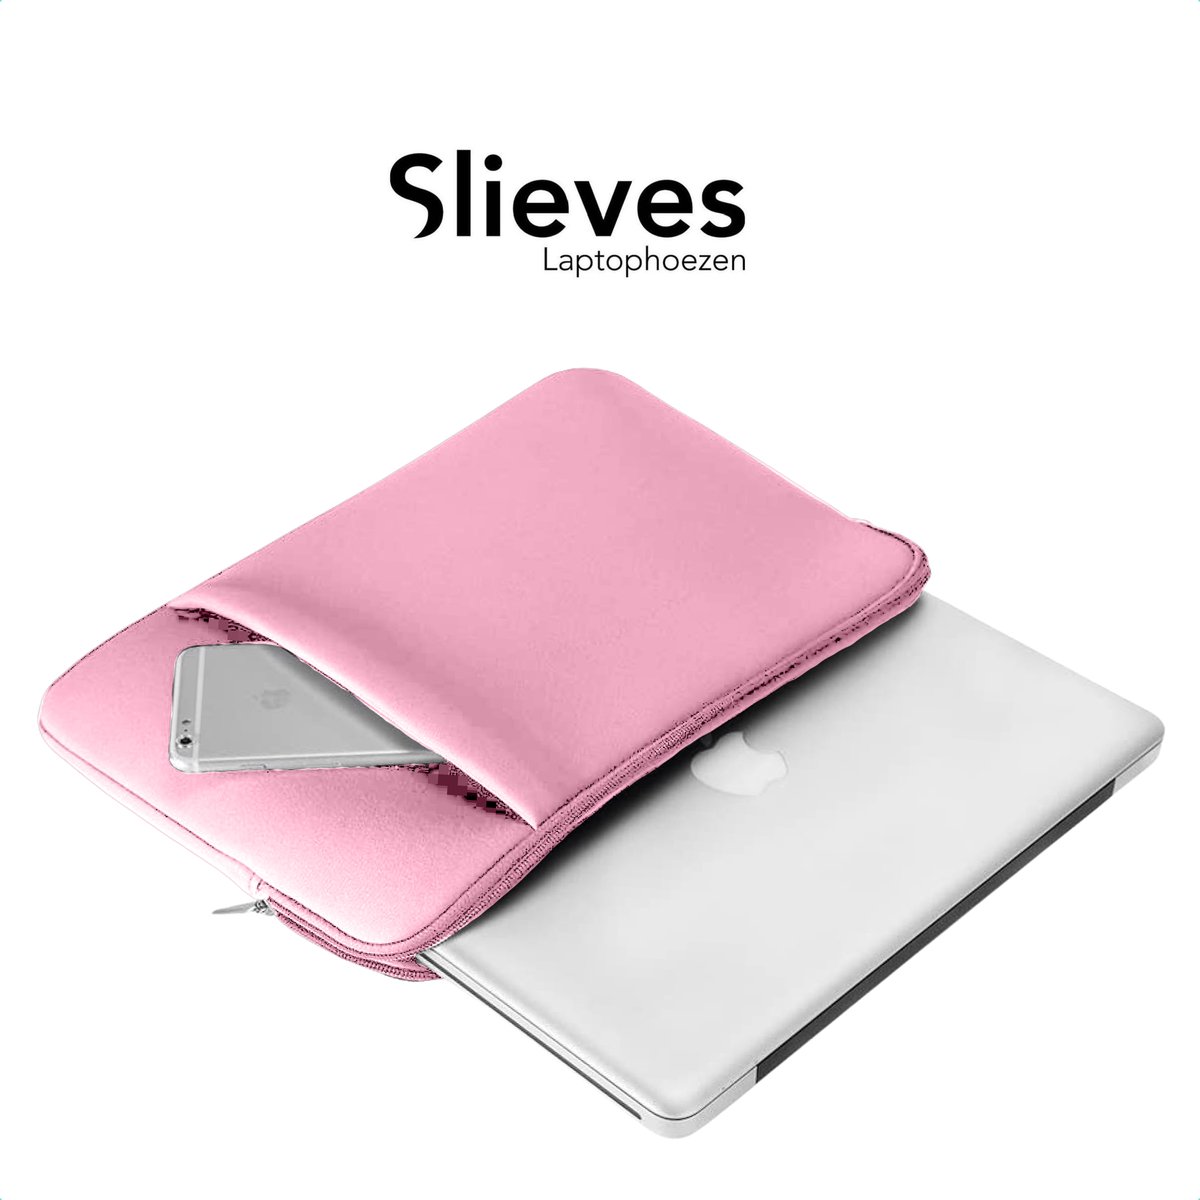 Slieves - Laptophoes - 15.6 inch - Laptop Sleeve - Schok Resistent - met Opbergvak - Neoprene - Roze